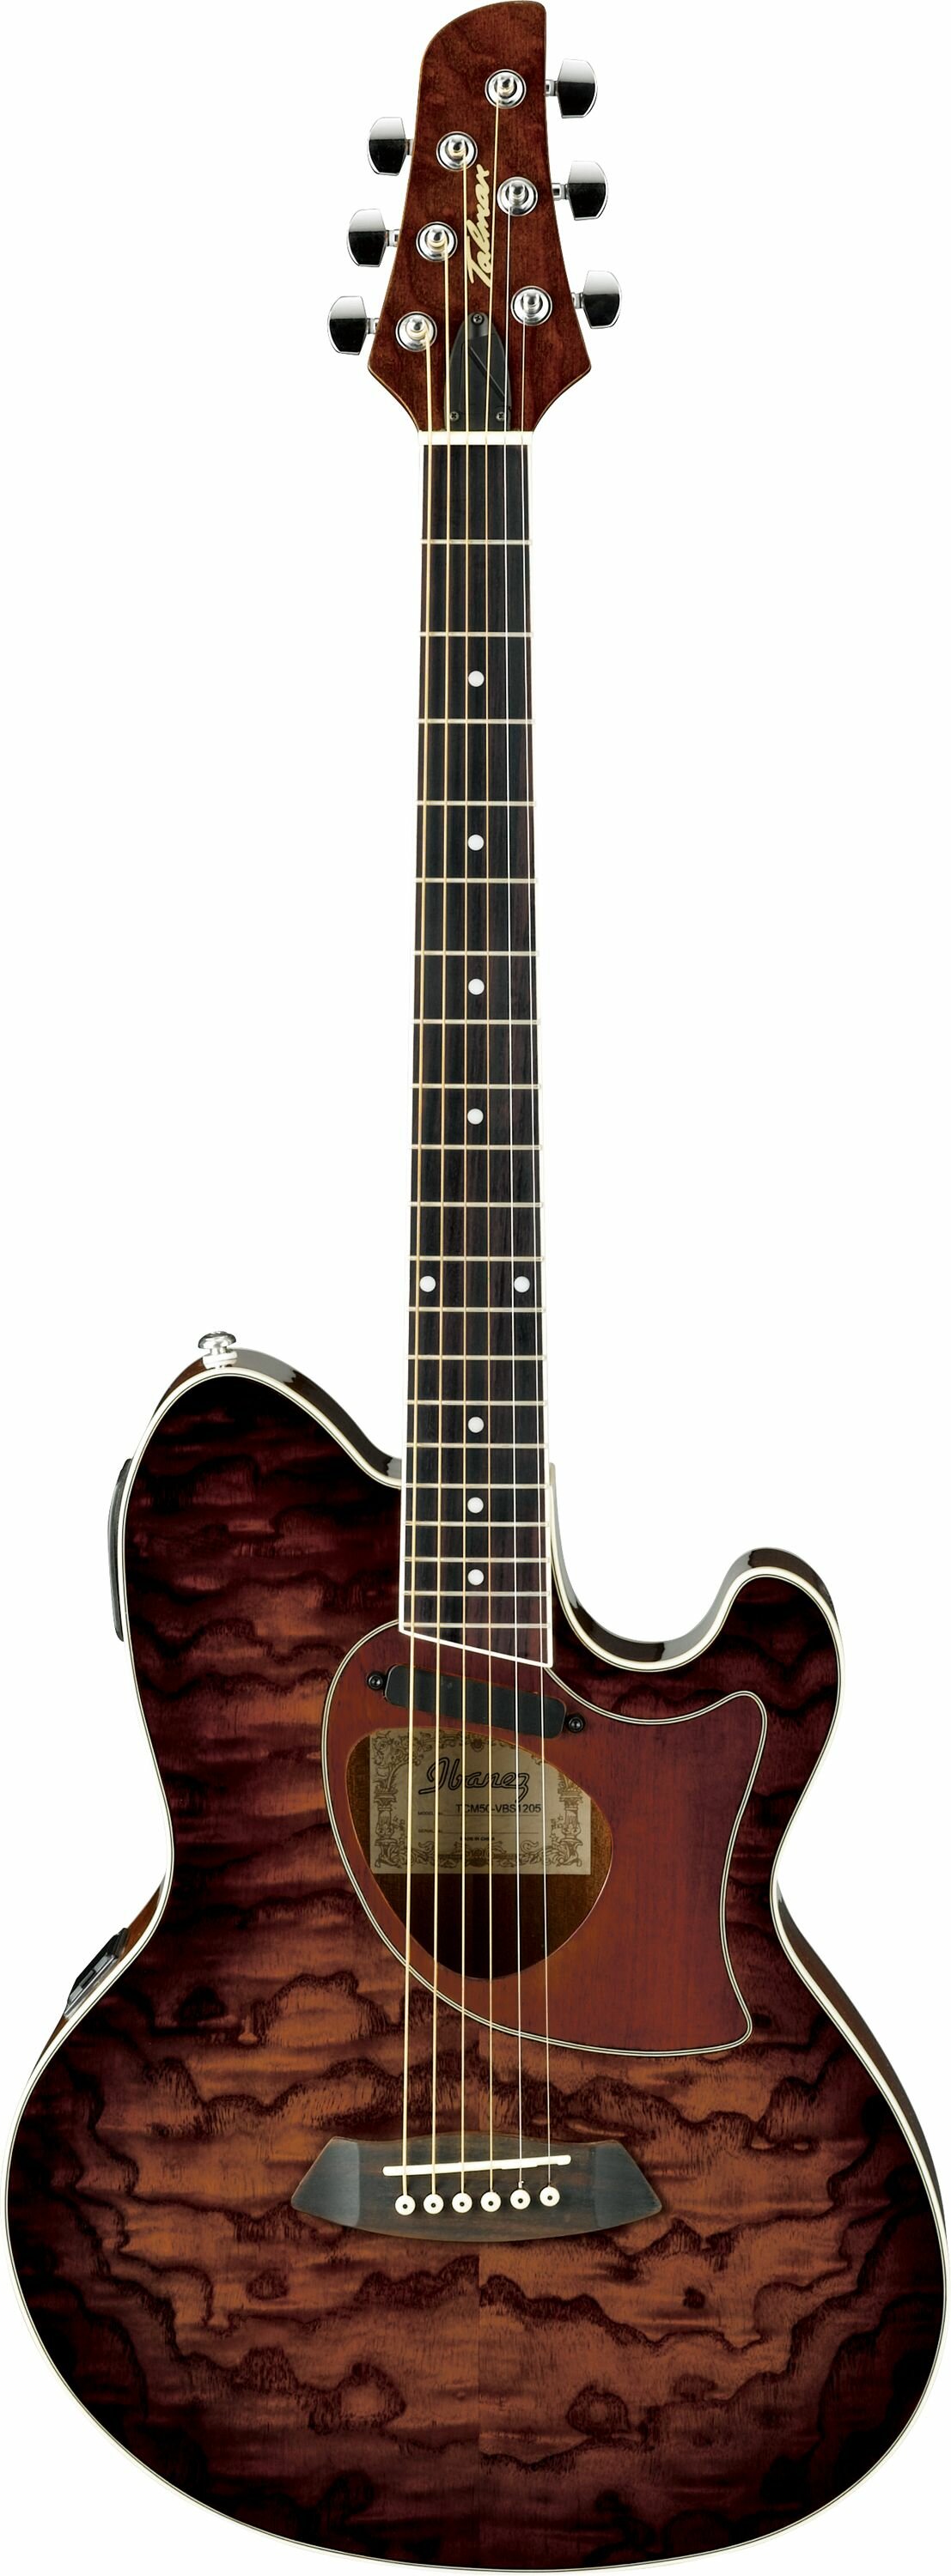 IBANEZ TCM50-VBS акустическая гитара